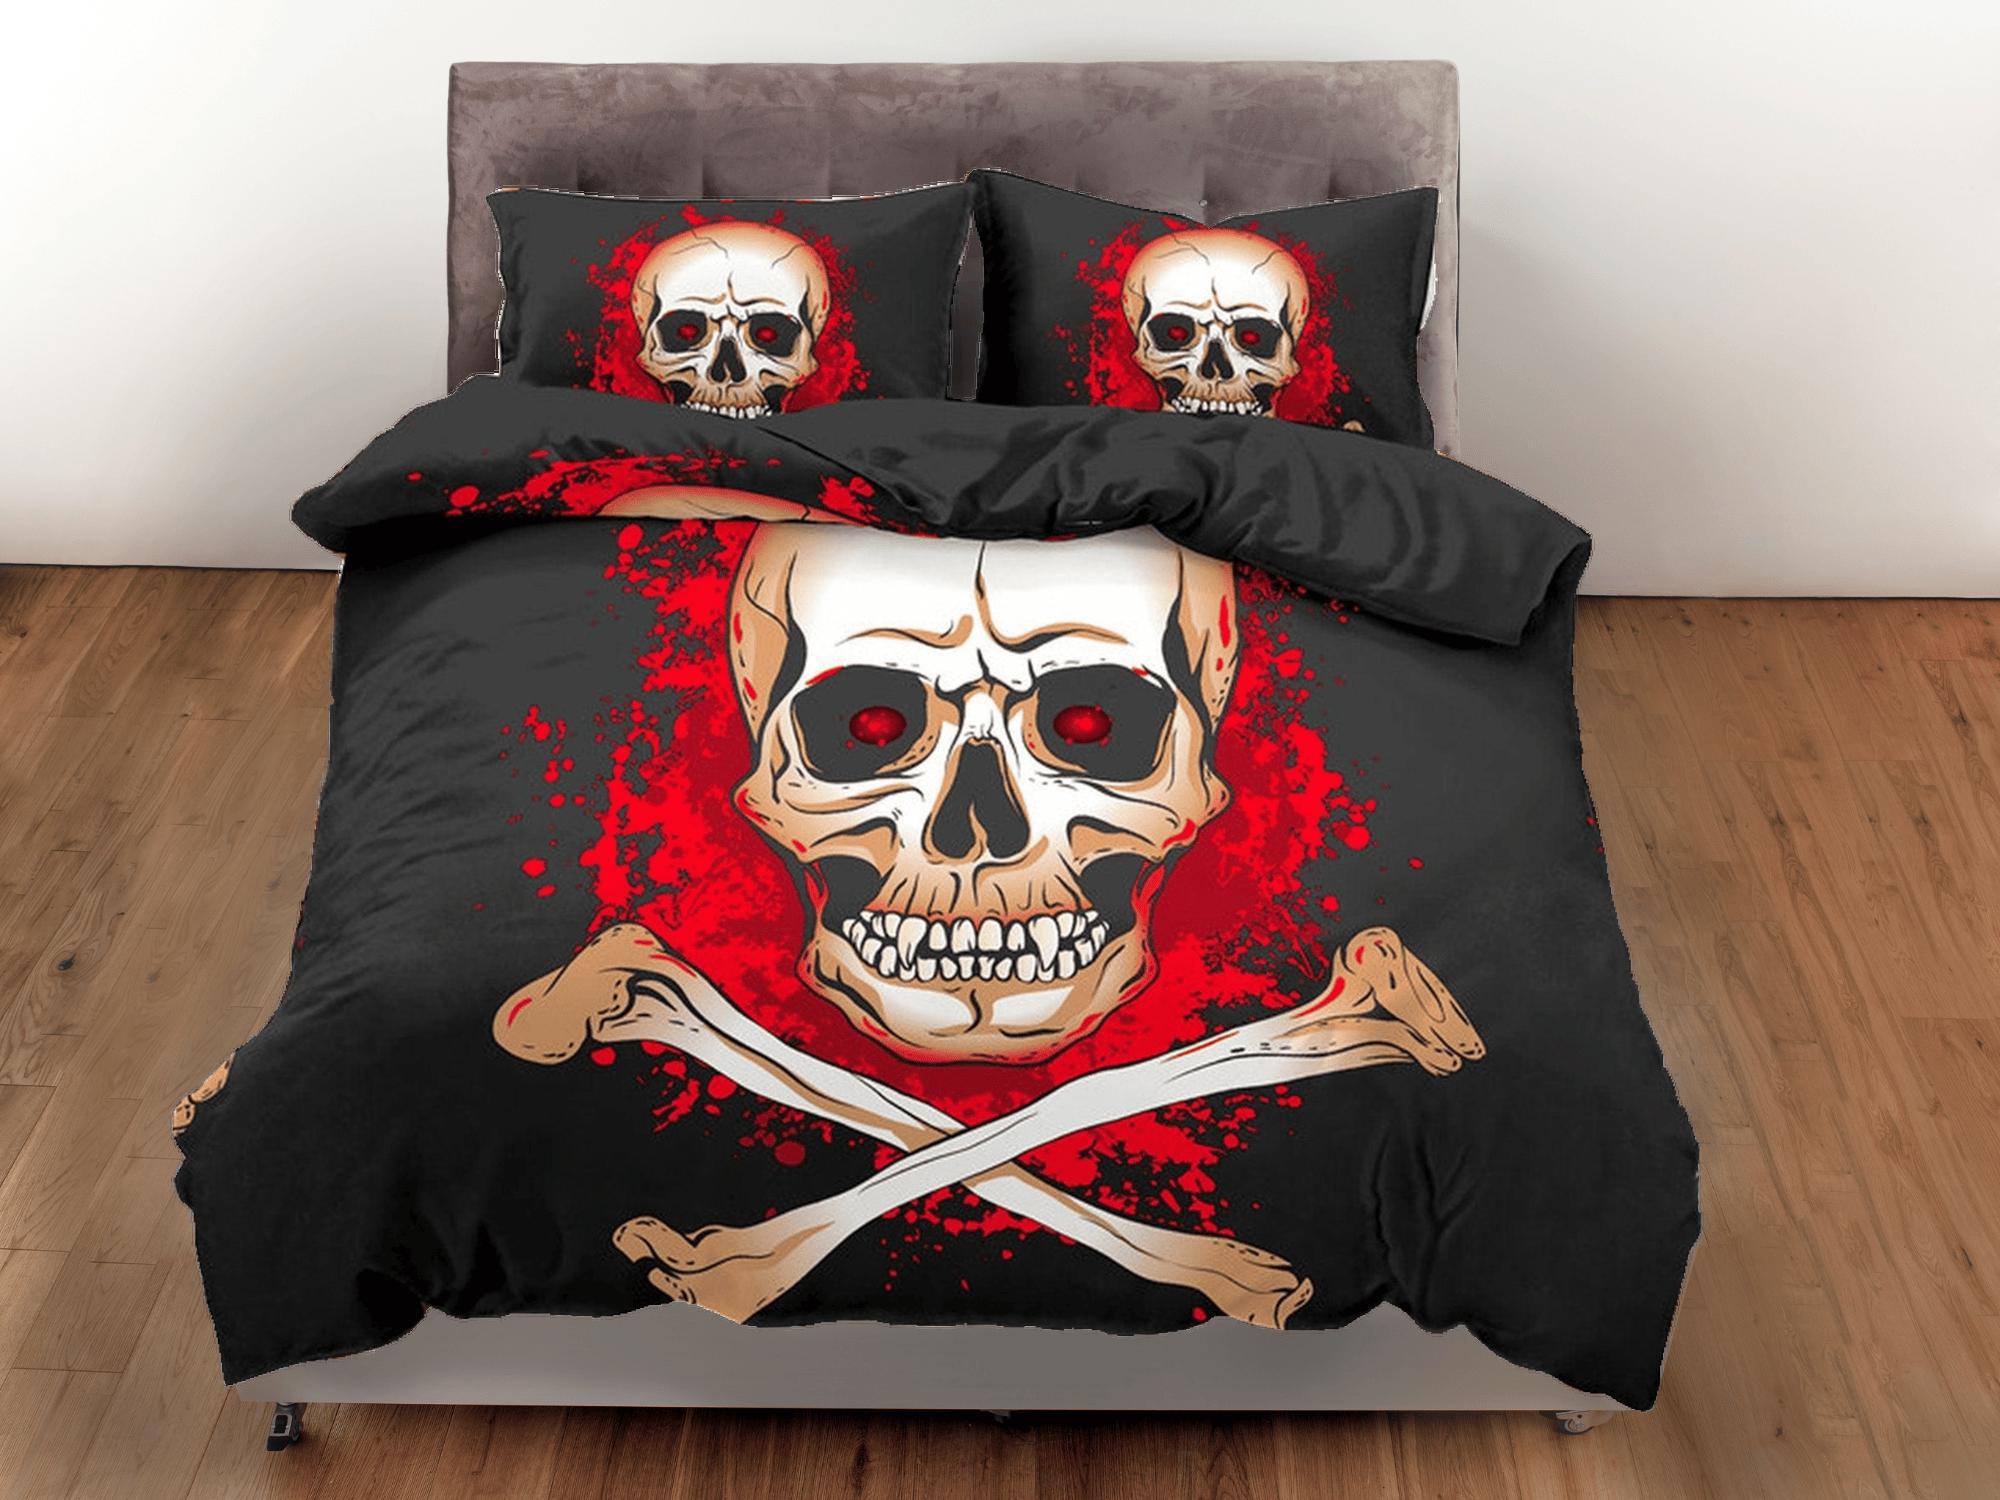 daintyduvet Flaming Skull Black Duvet Cover Set Bedspread, Dorm Bedding with Pillowcase